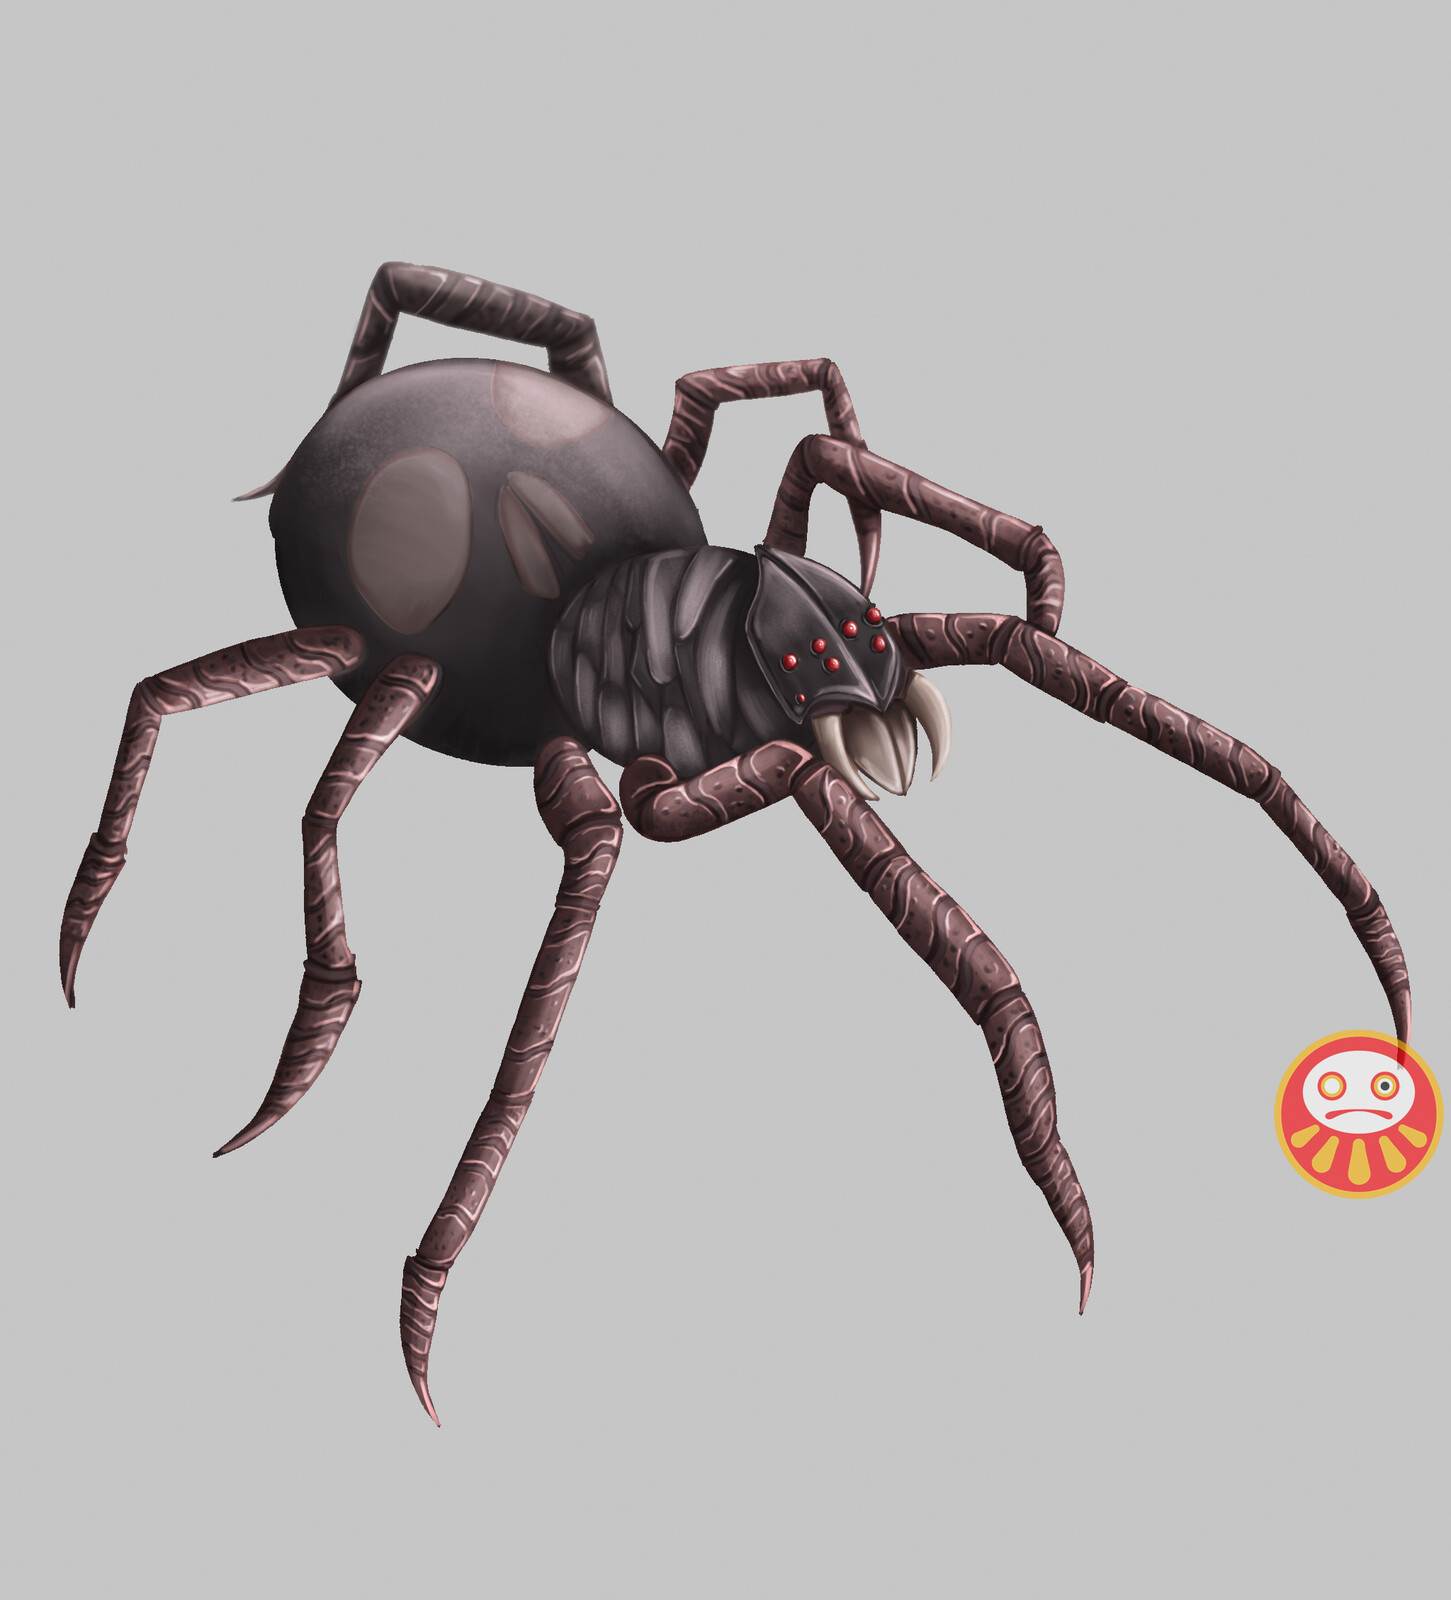 Giant Spider